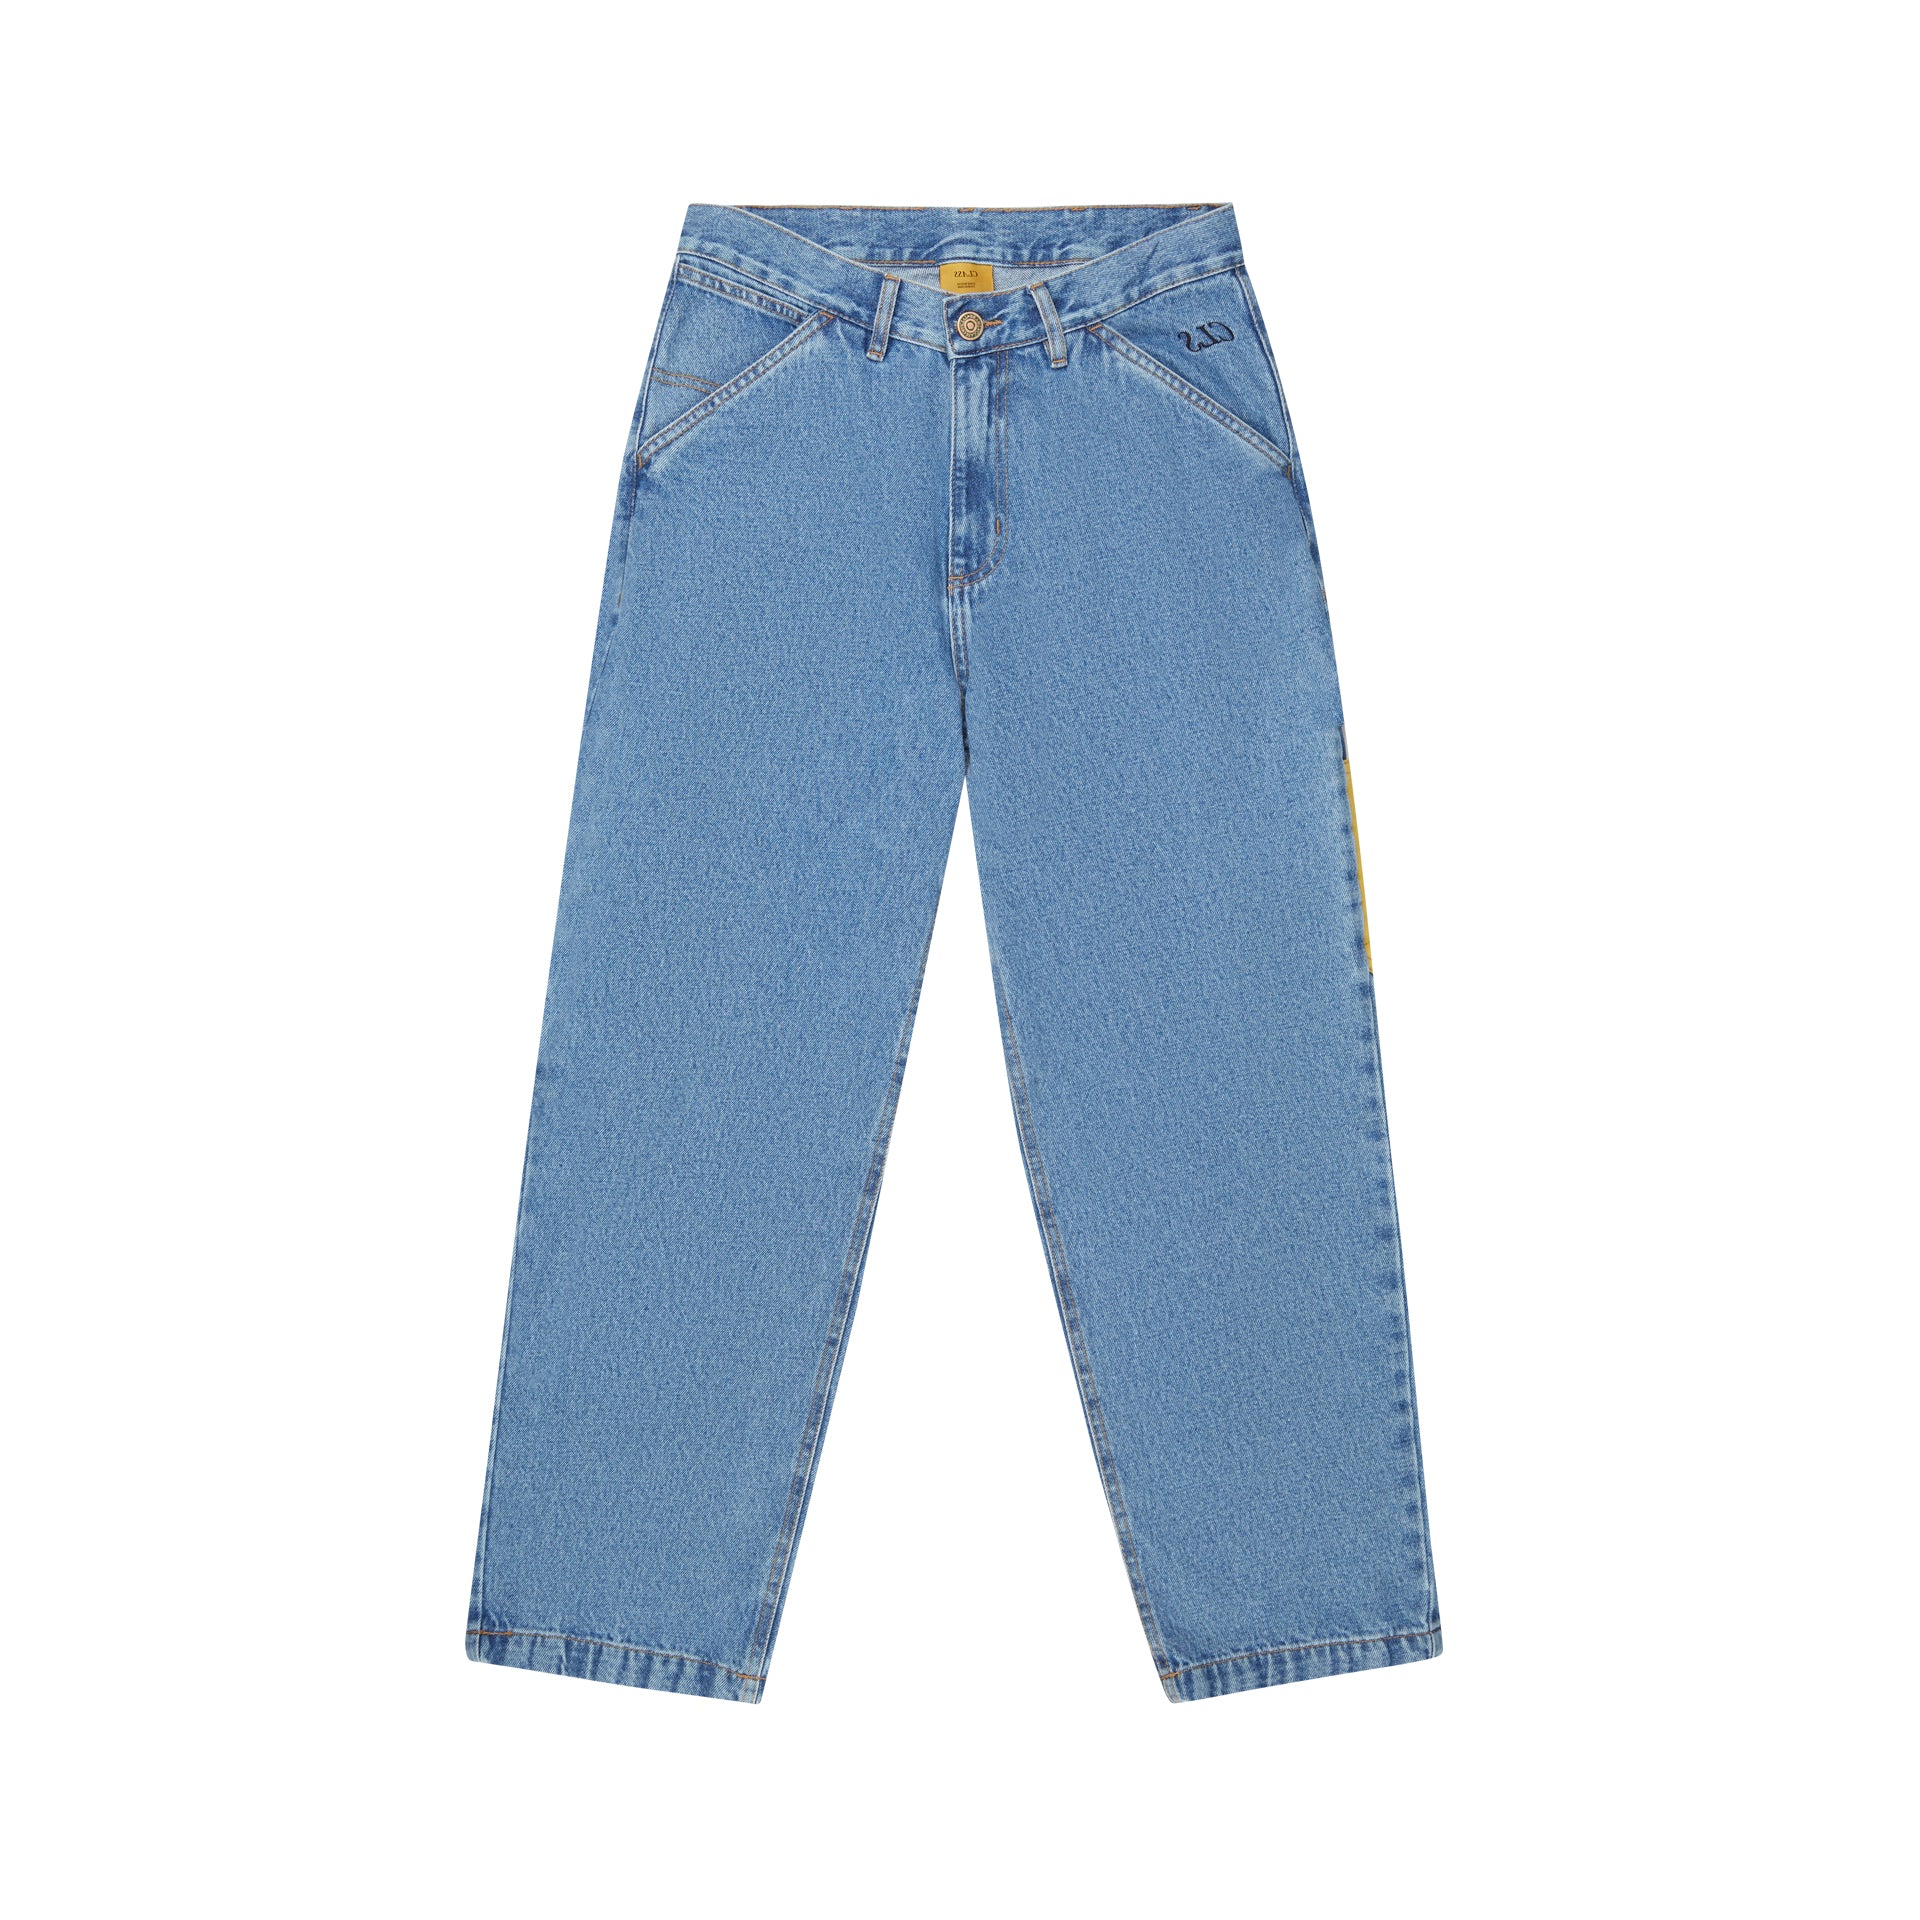 CLASS - Jeans Pants Primary Colors Light Blue